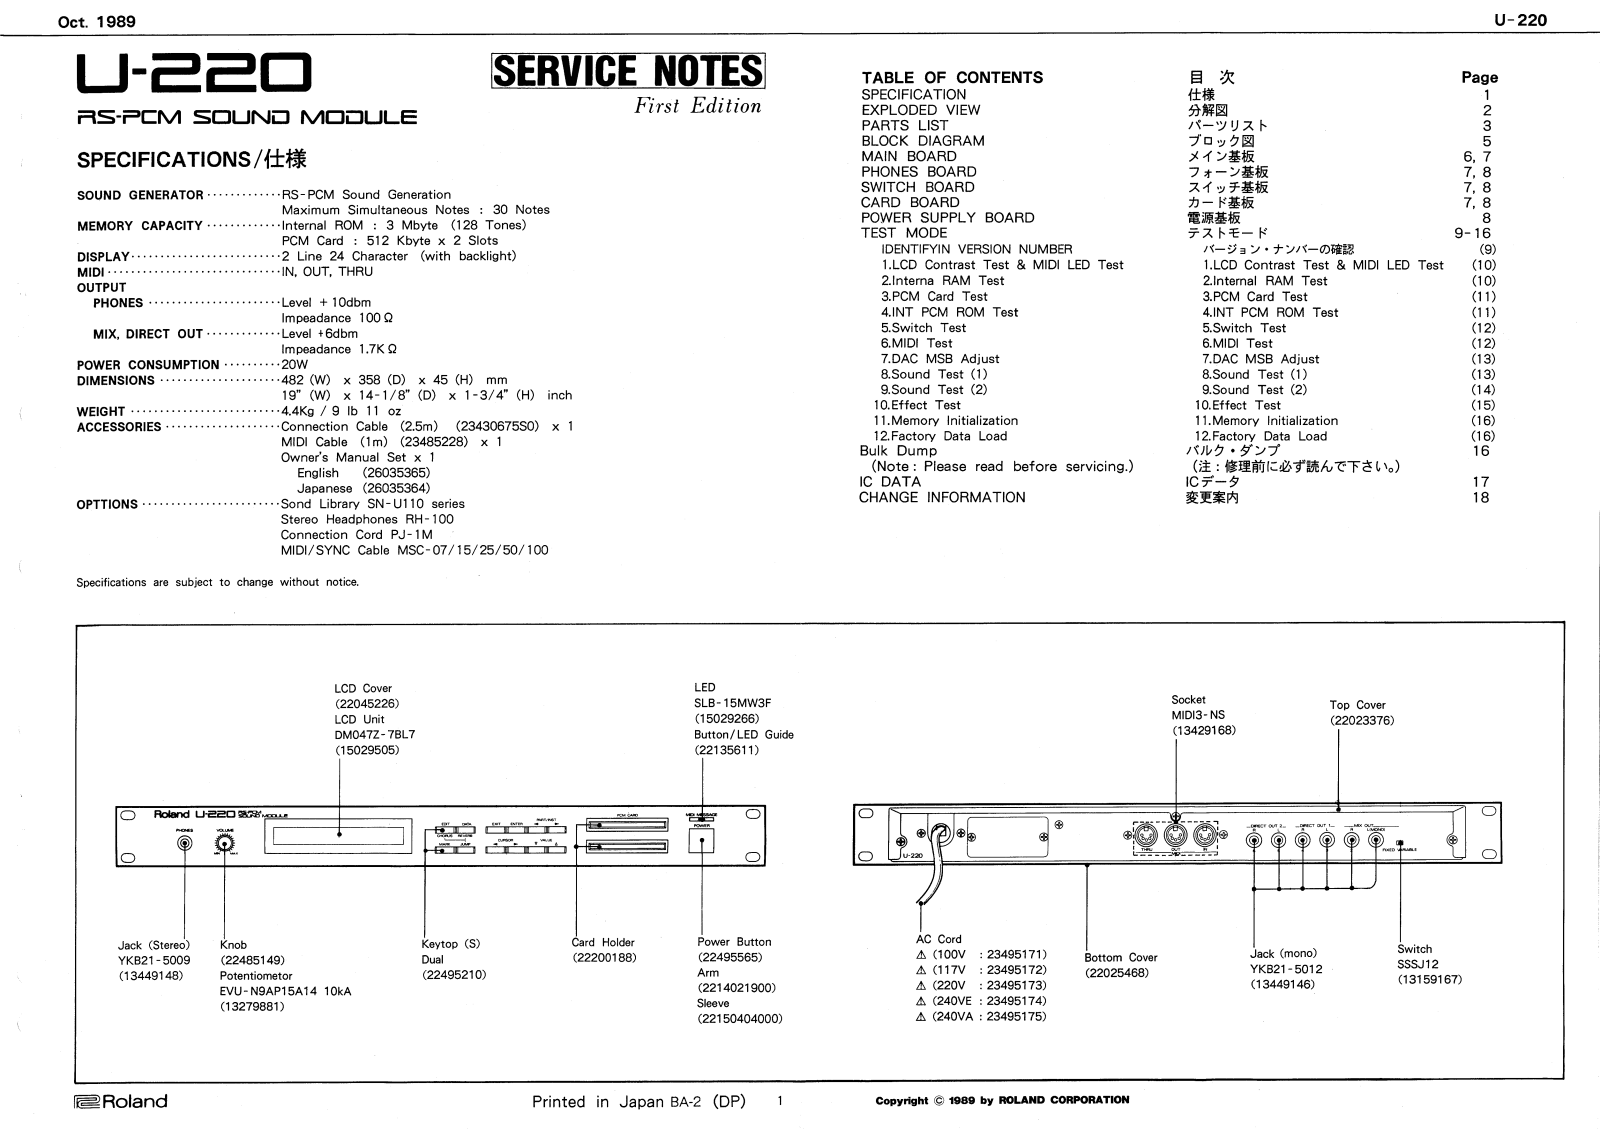 Roland U-220 Service Manual